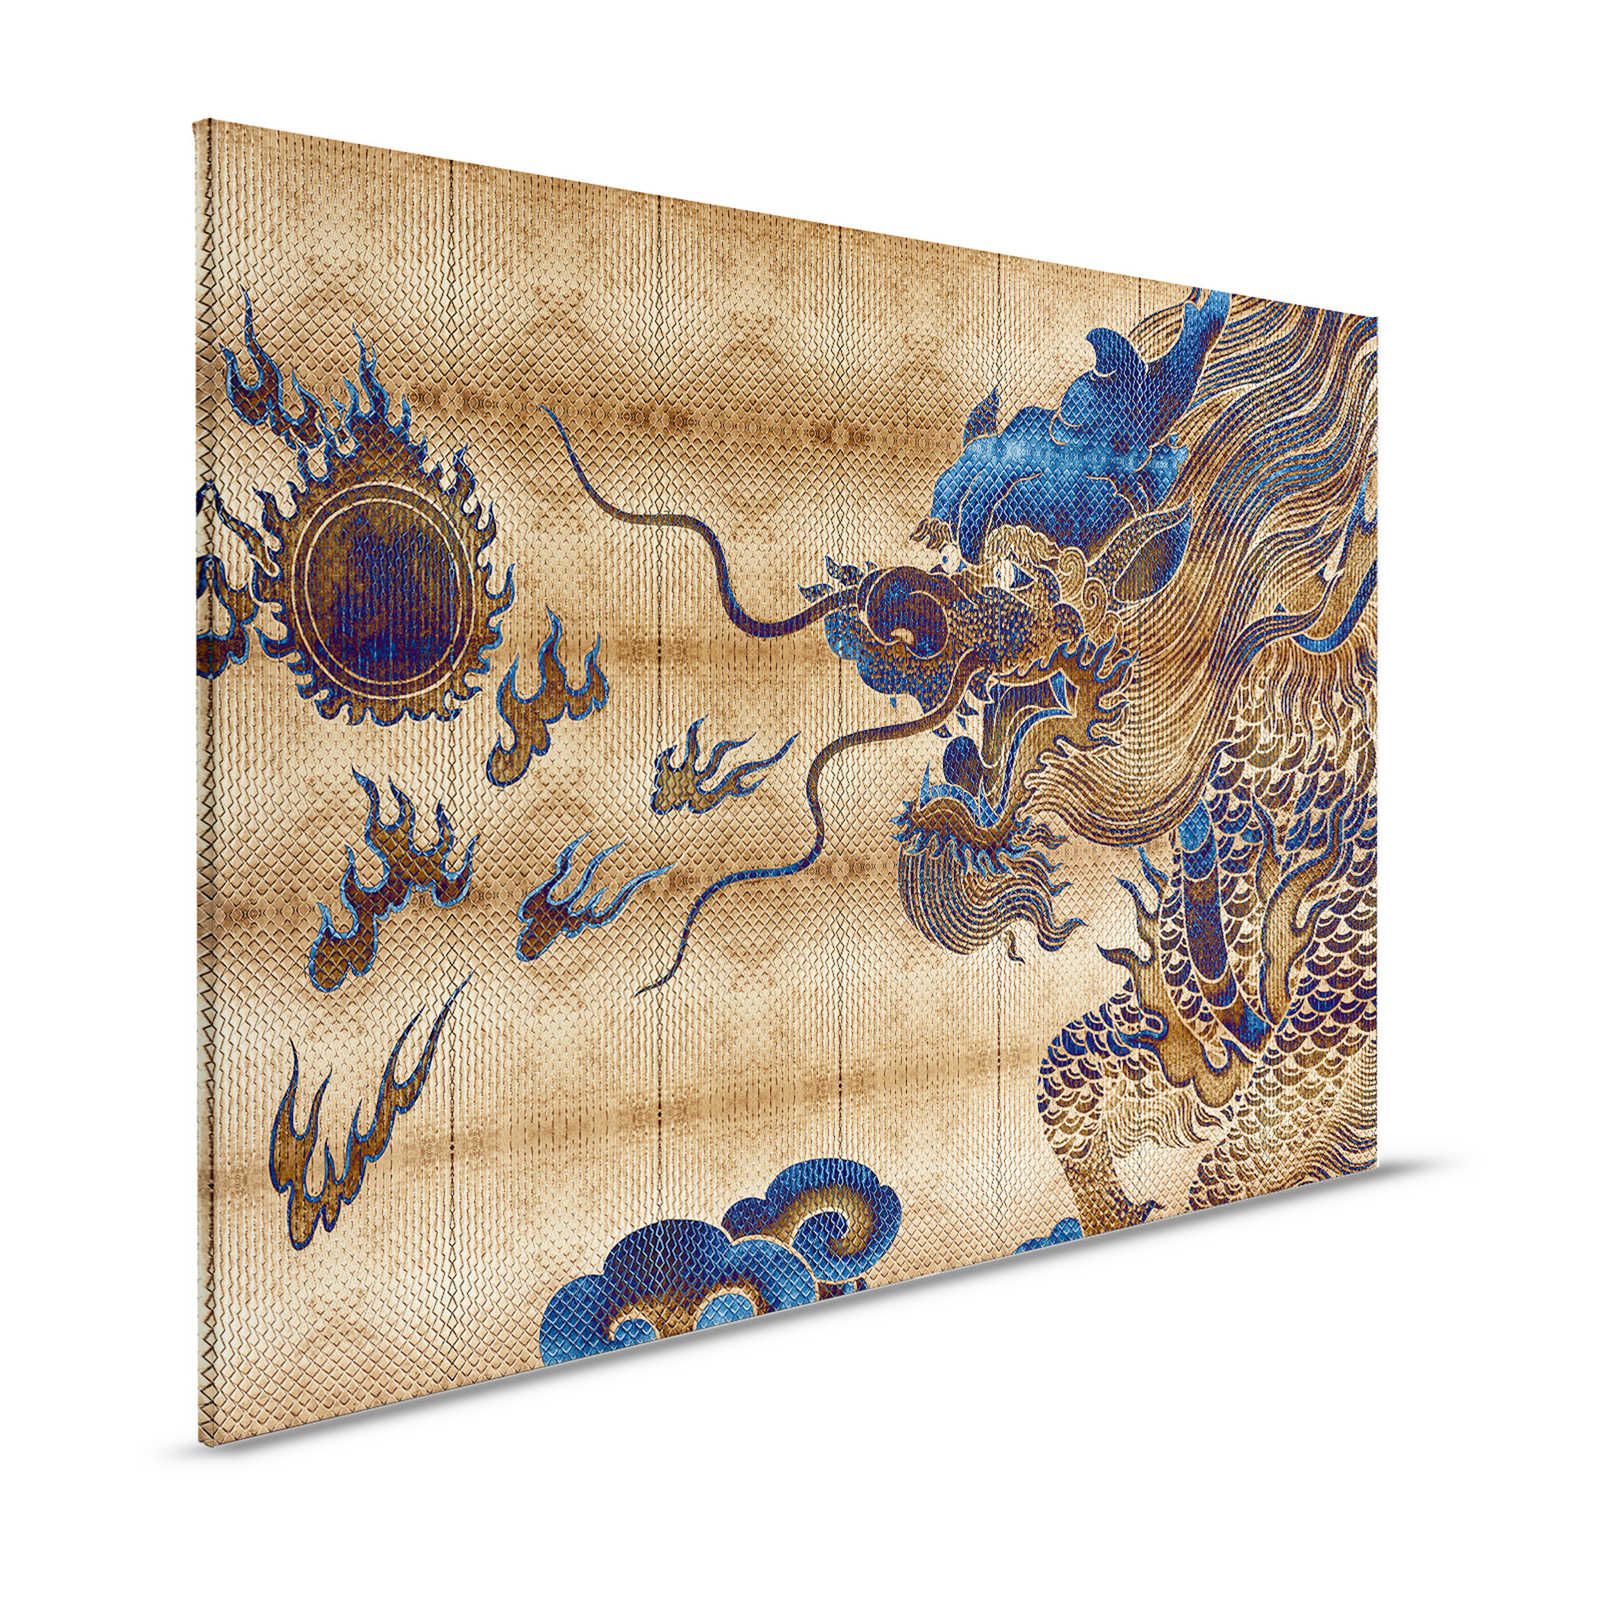 Shenzen 2 - Canvas schilderij Gouden Draak in Aziatische stijl - 1,20 m x 0,80 m
